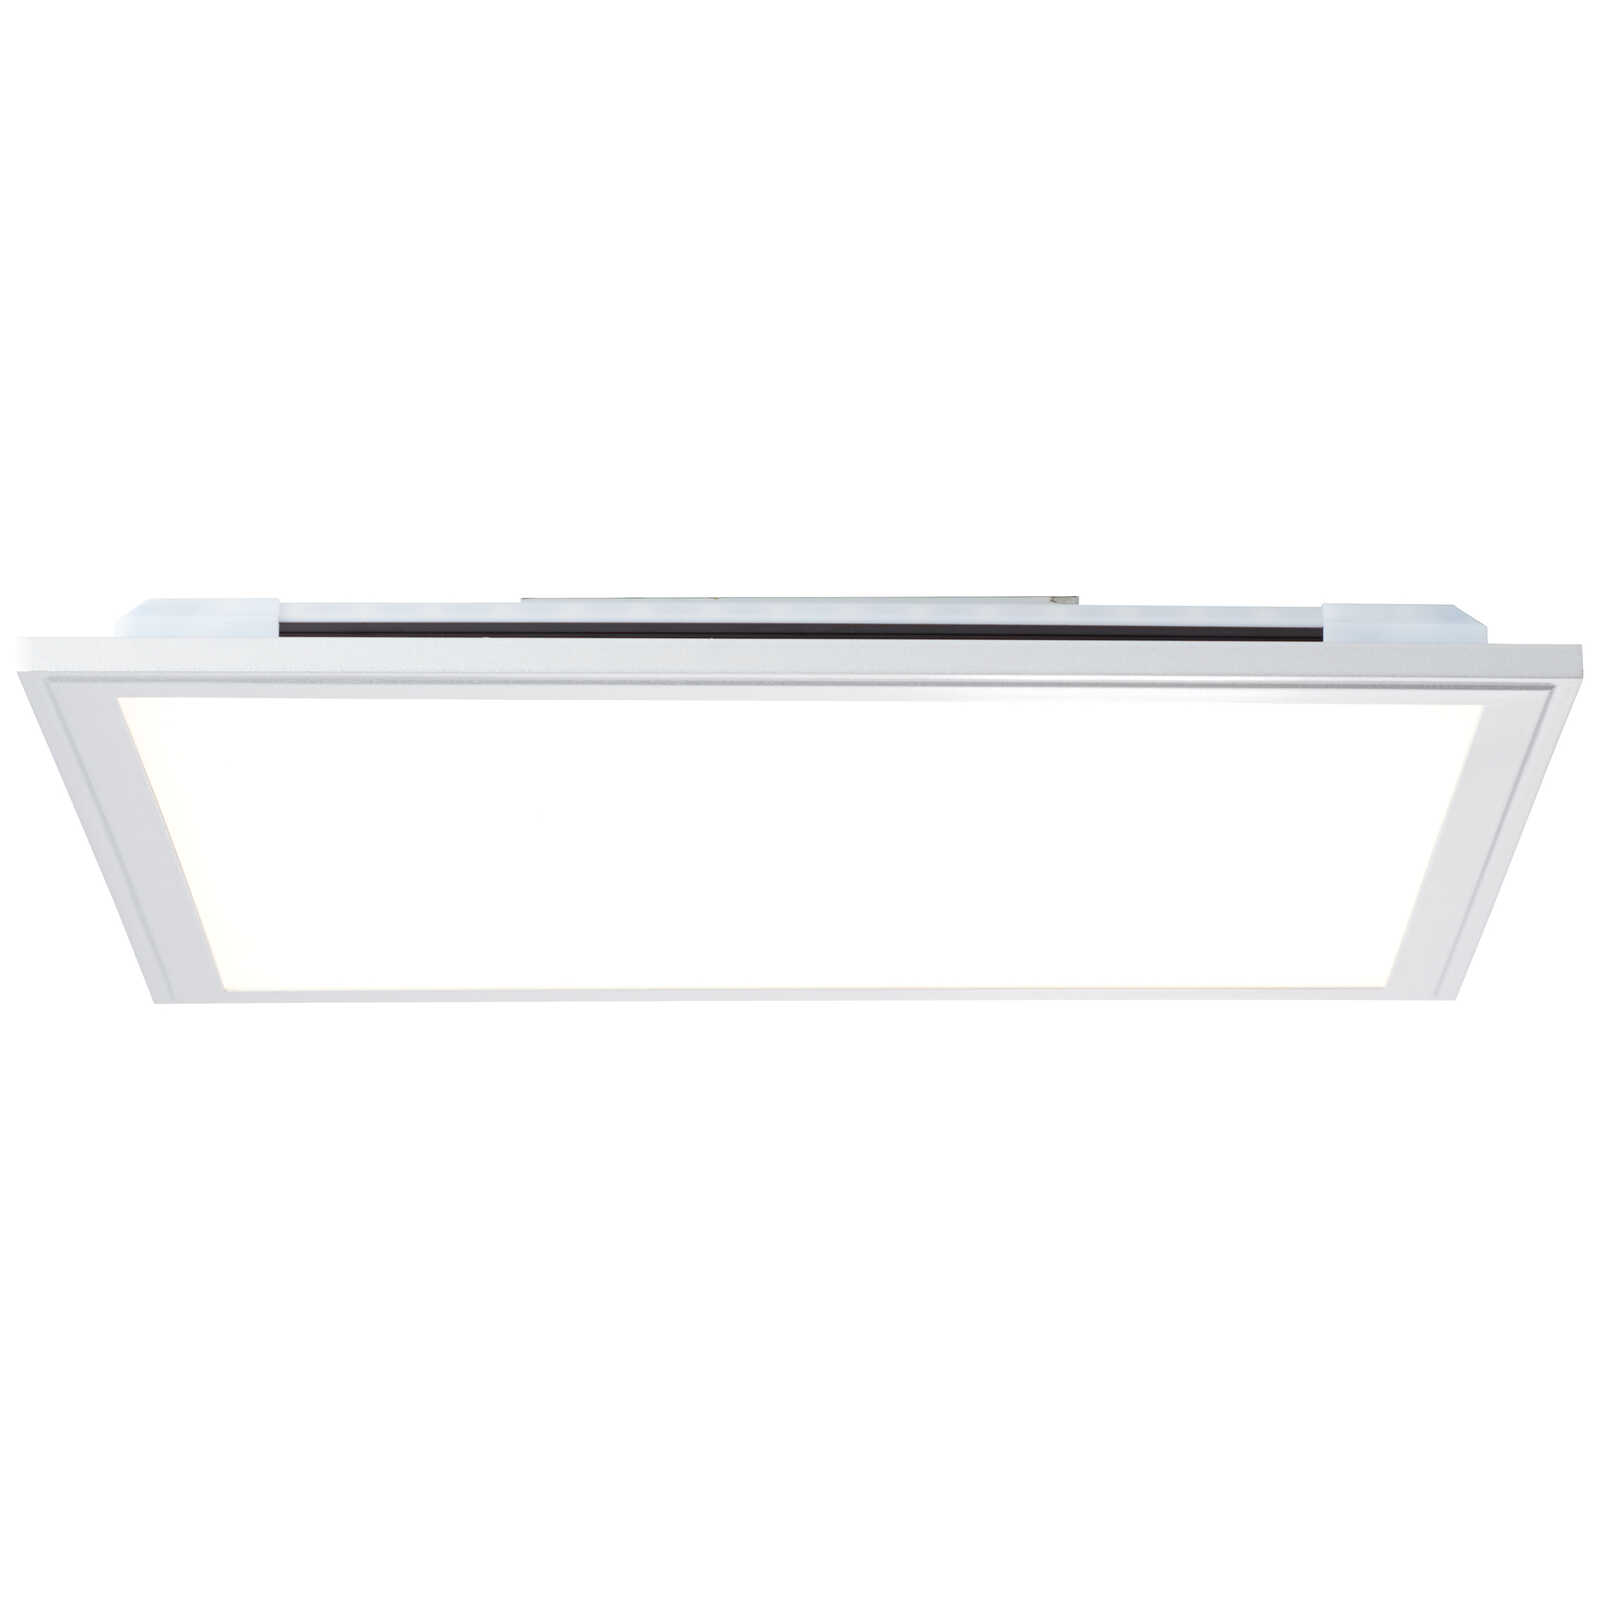             Metal ceiling light - Alba 1 - silver, white
        